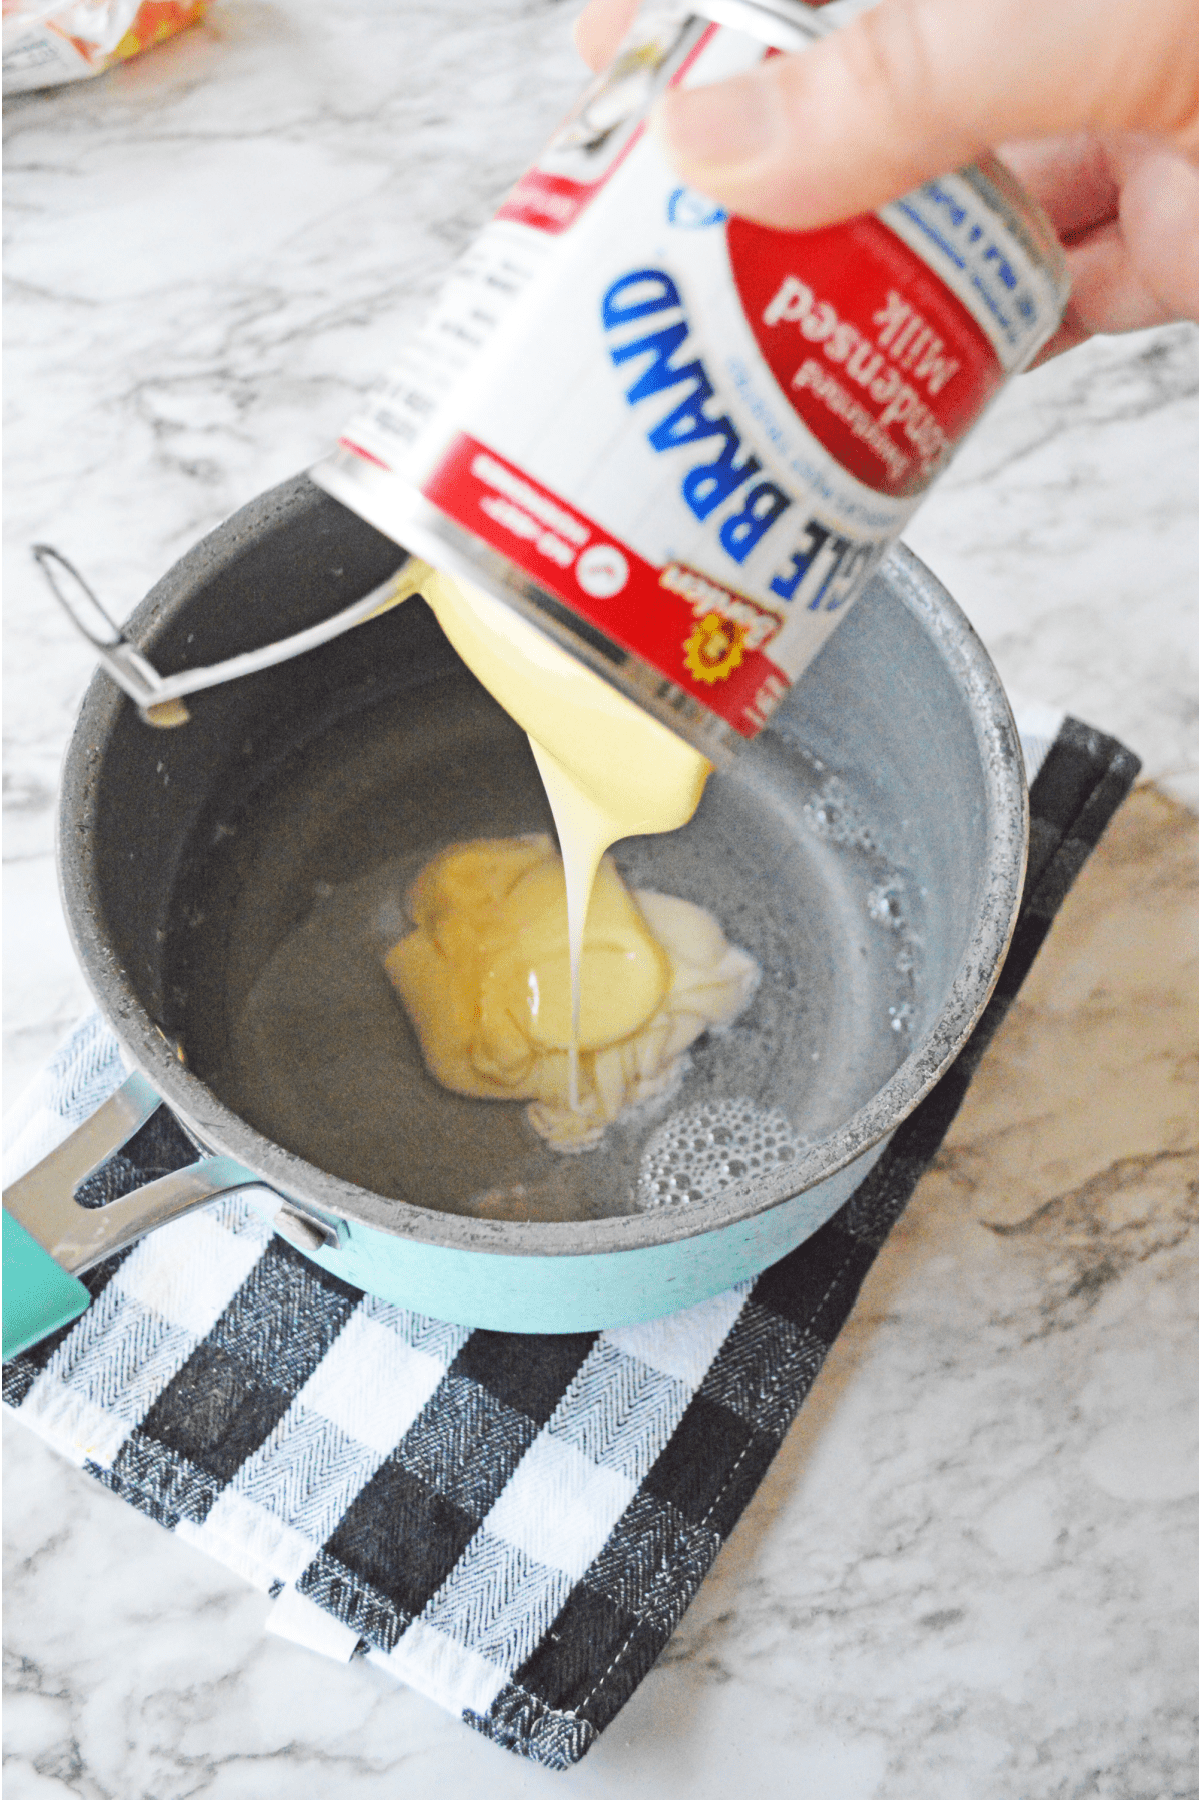 Adding sweetened condensed milk to saucepan